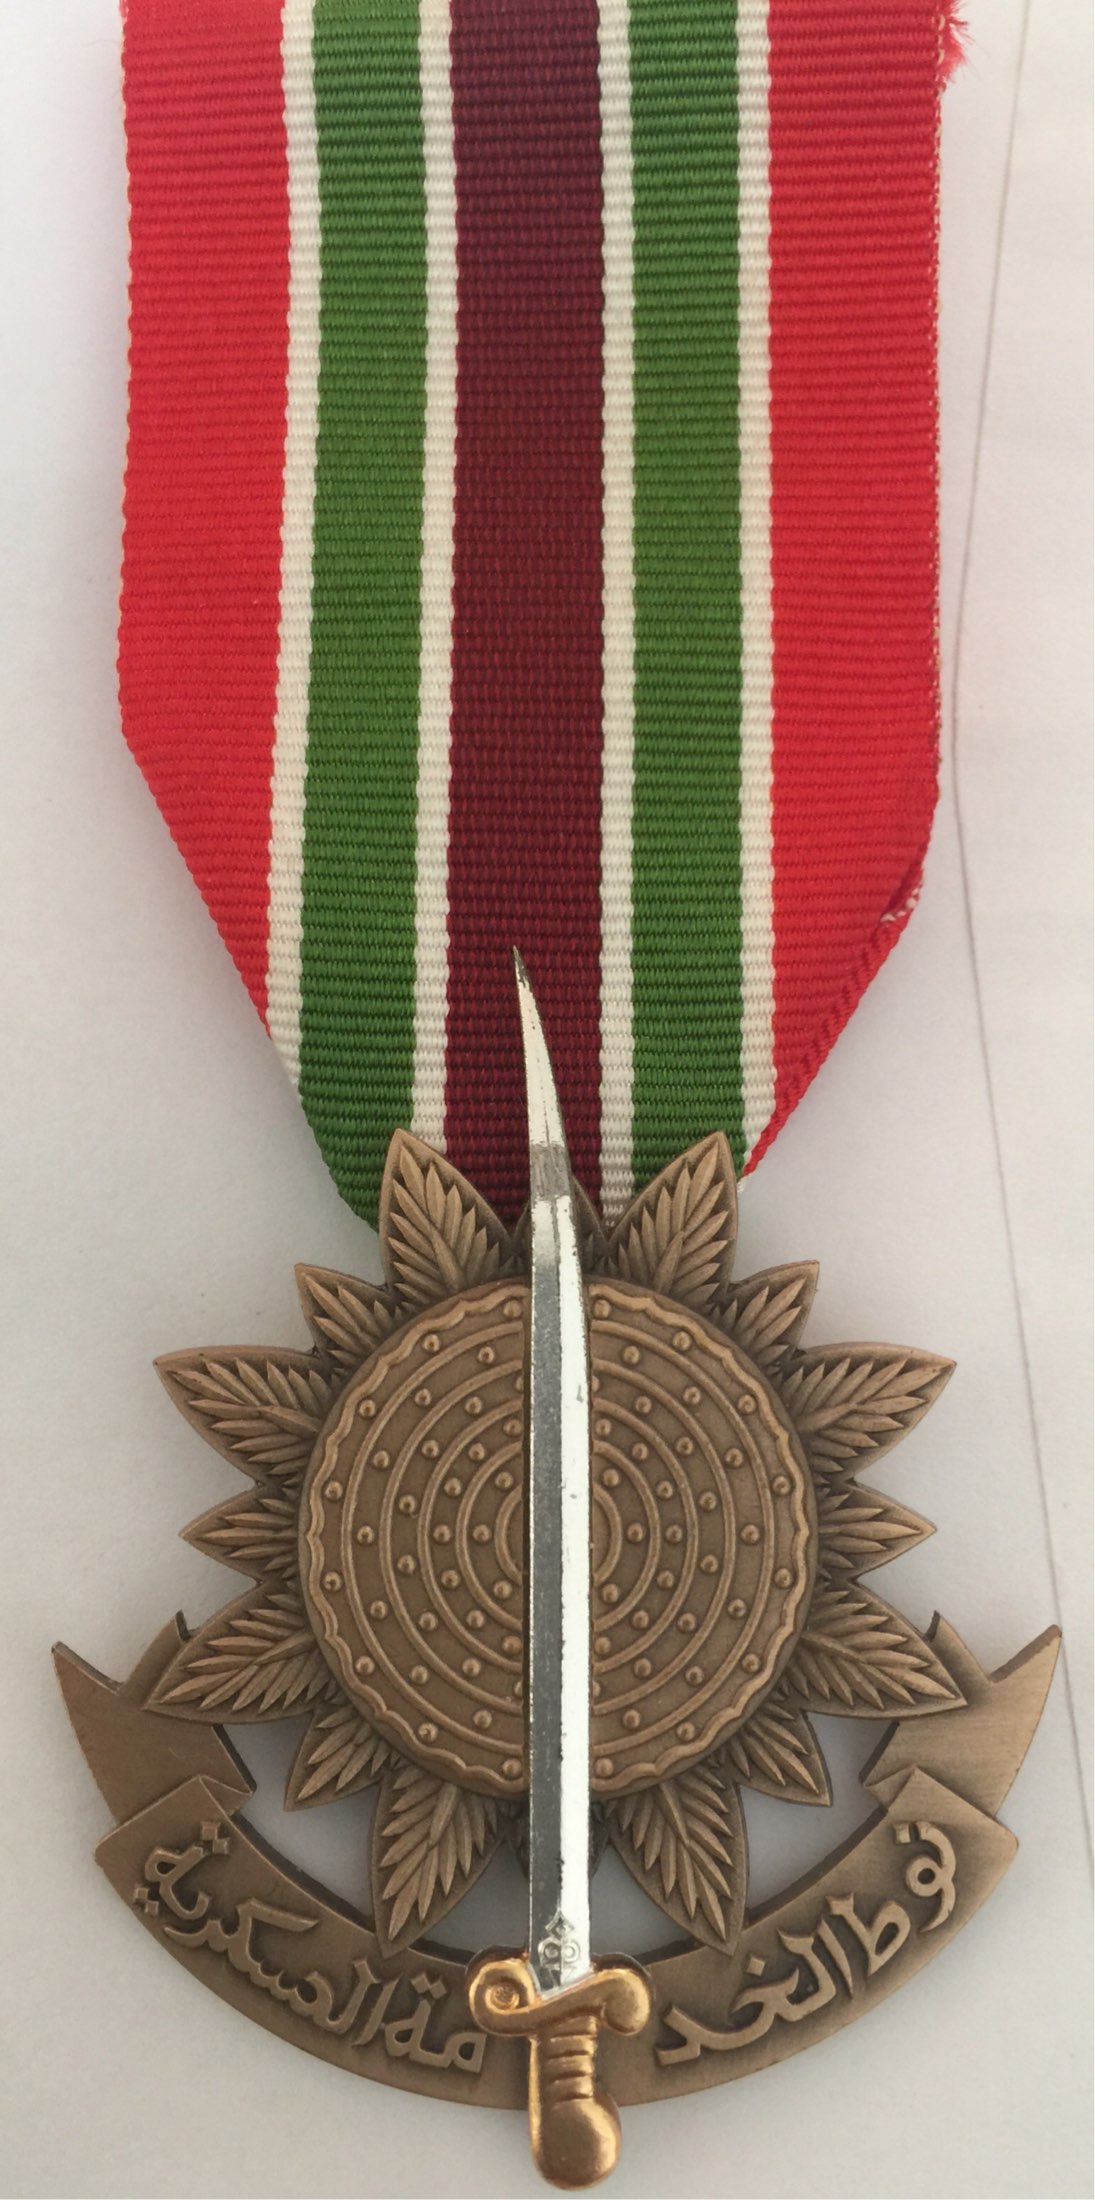 Kingdom of Saudi Arabia Military Service Medal Badge Order King Fahad Ultra Rare